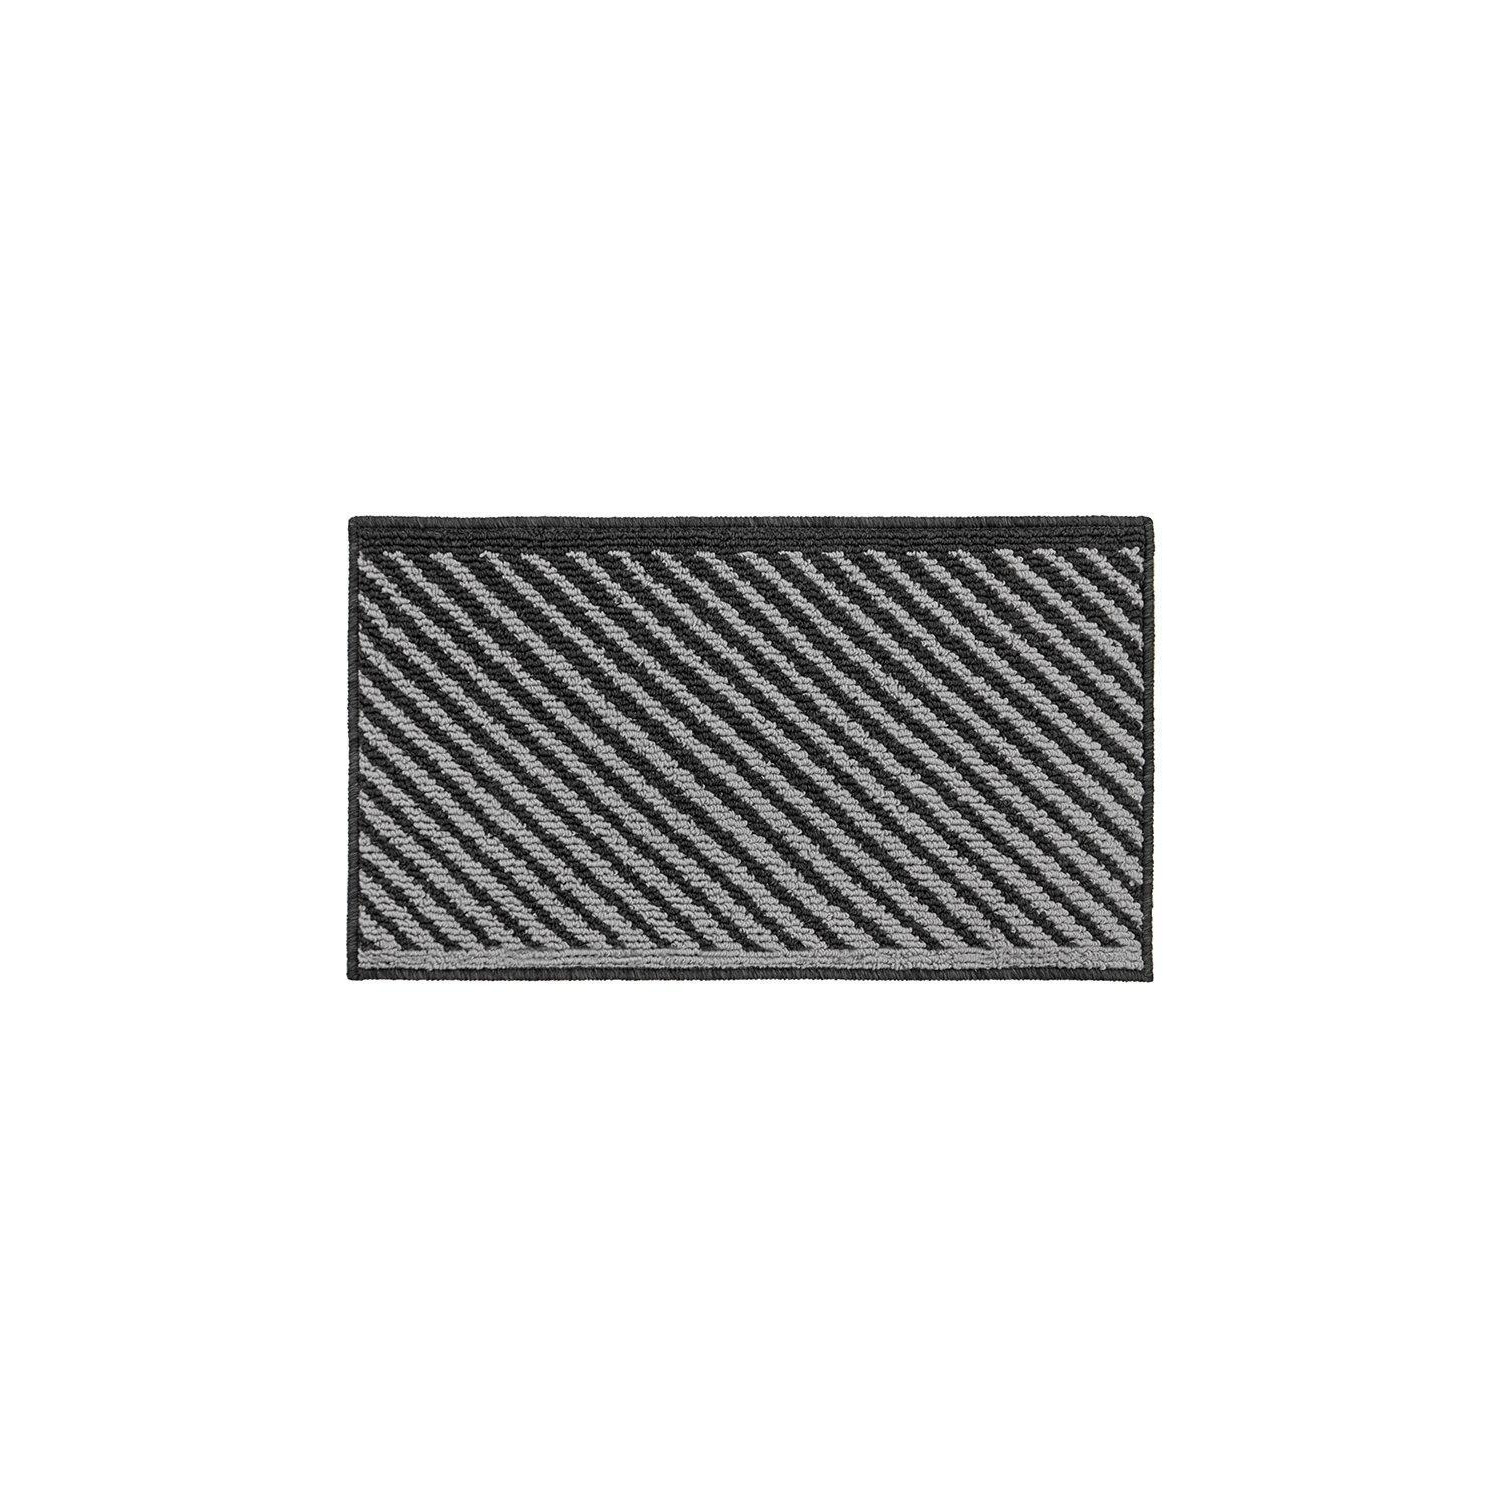 Stellar Machine Washable Latex Backed Doormat, 40x70cm, Black - image 1